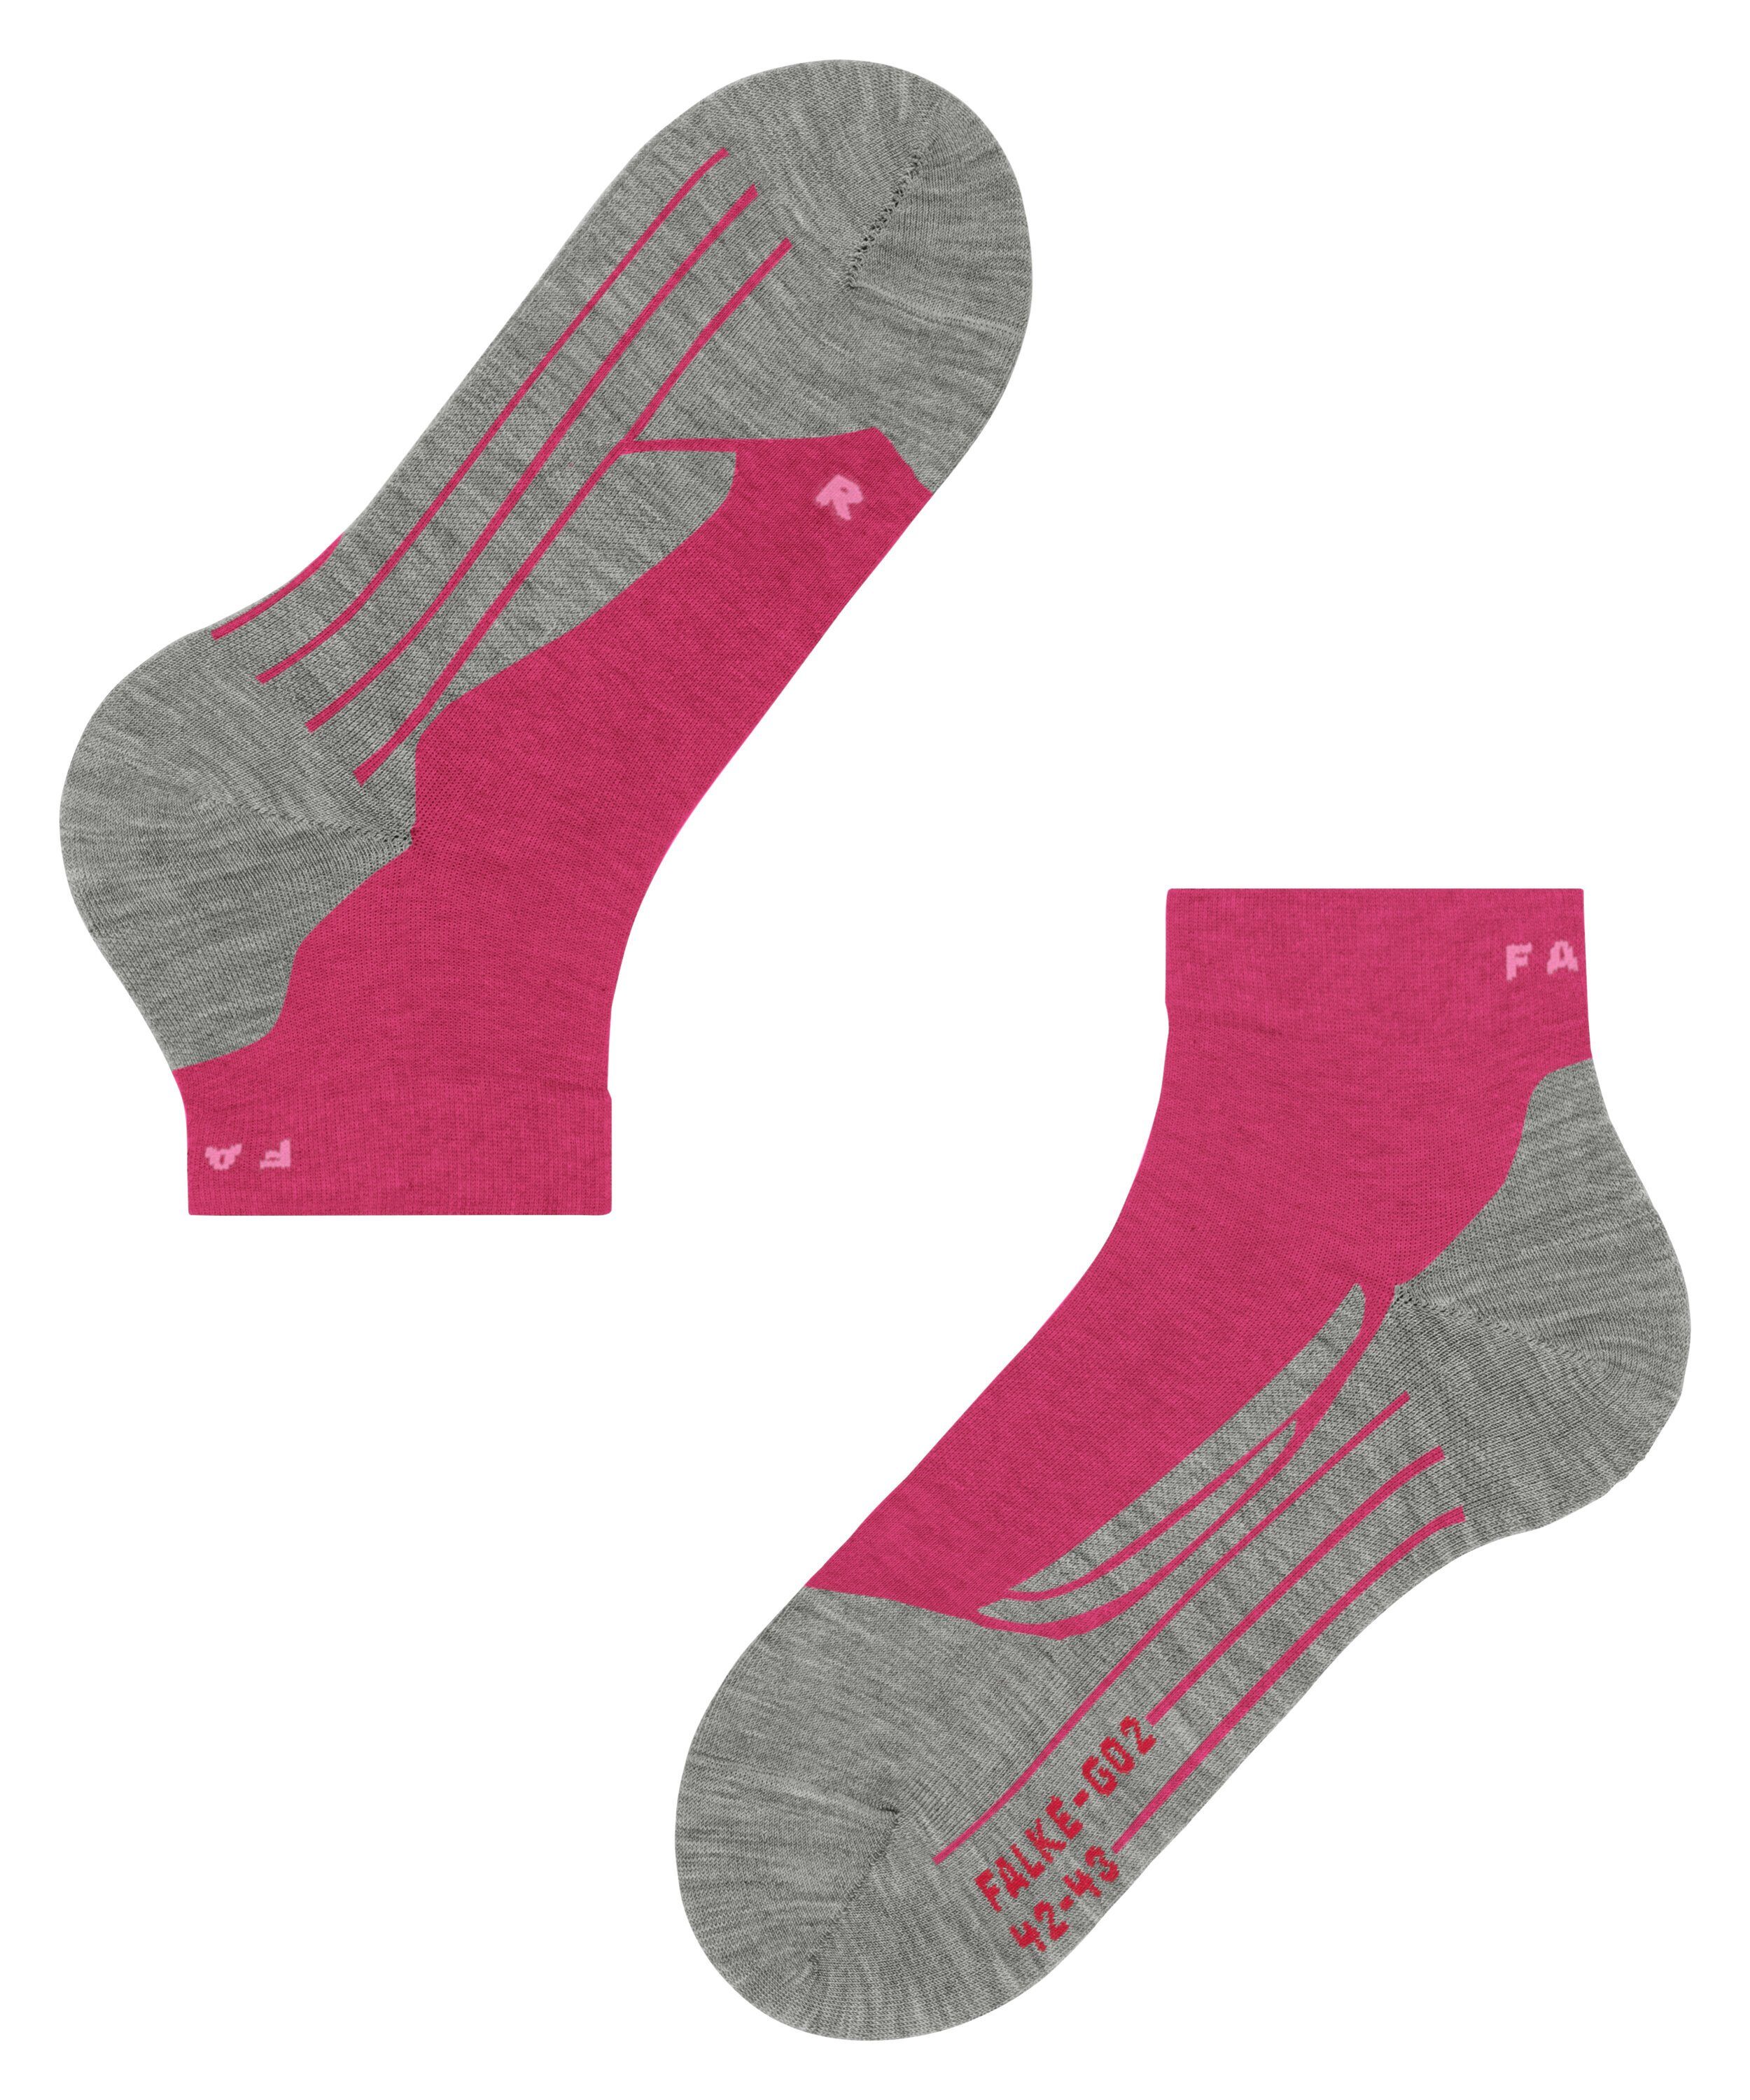 für GO2 FALKE (1-Paar) (8564) Spikeschuhe Short Polsterung Sportsocken mit rose mittelstarker